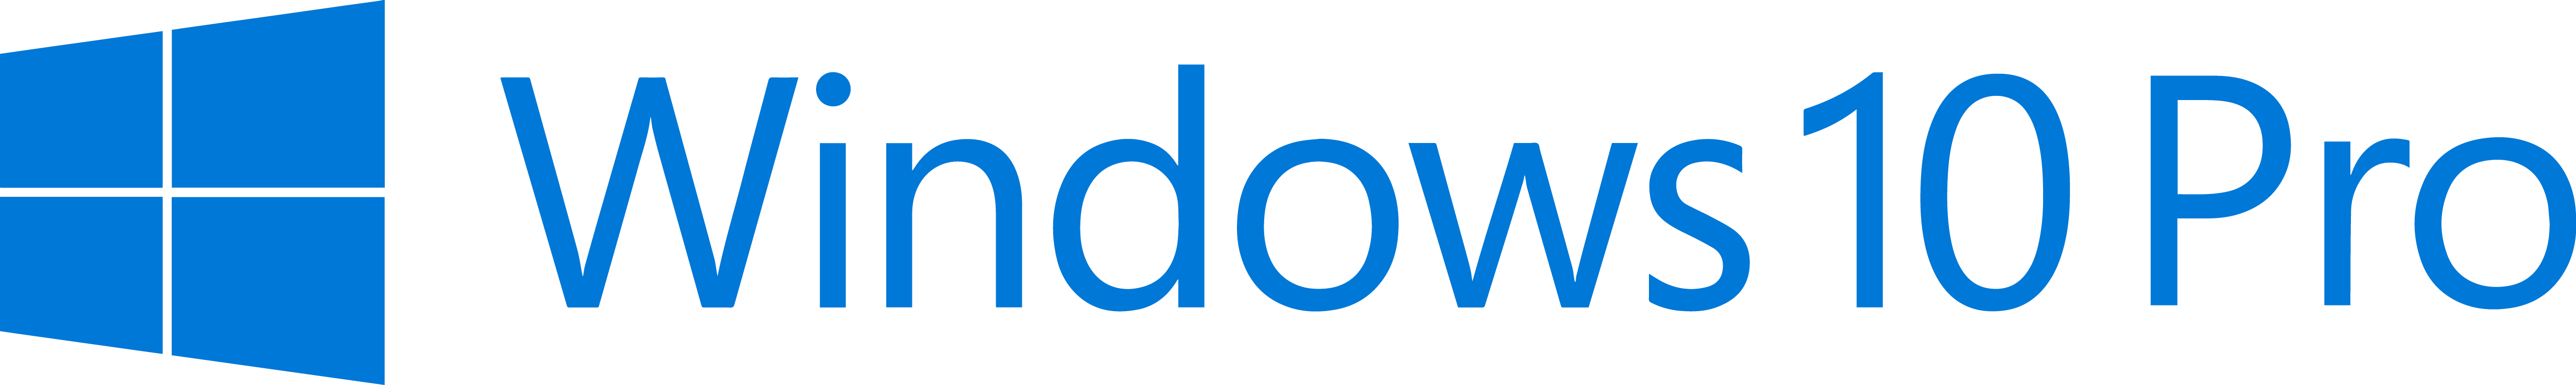 Windows 10 Pro - workstation